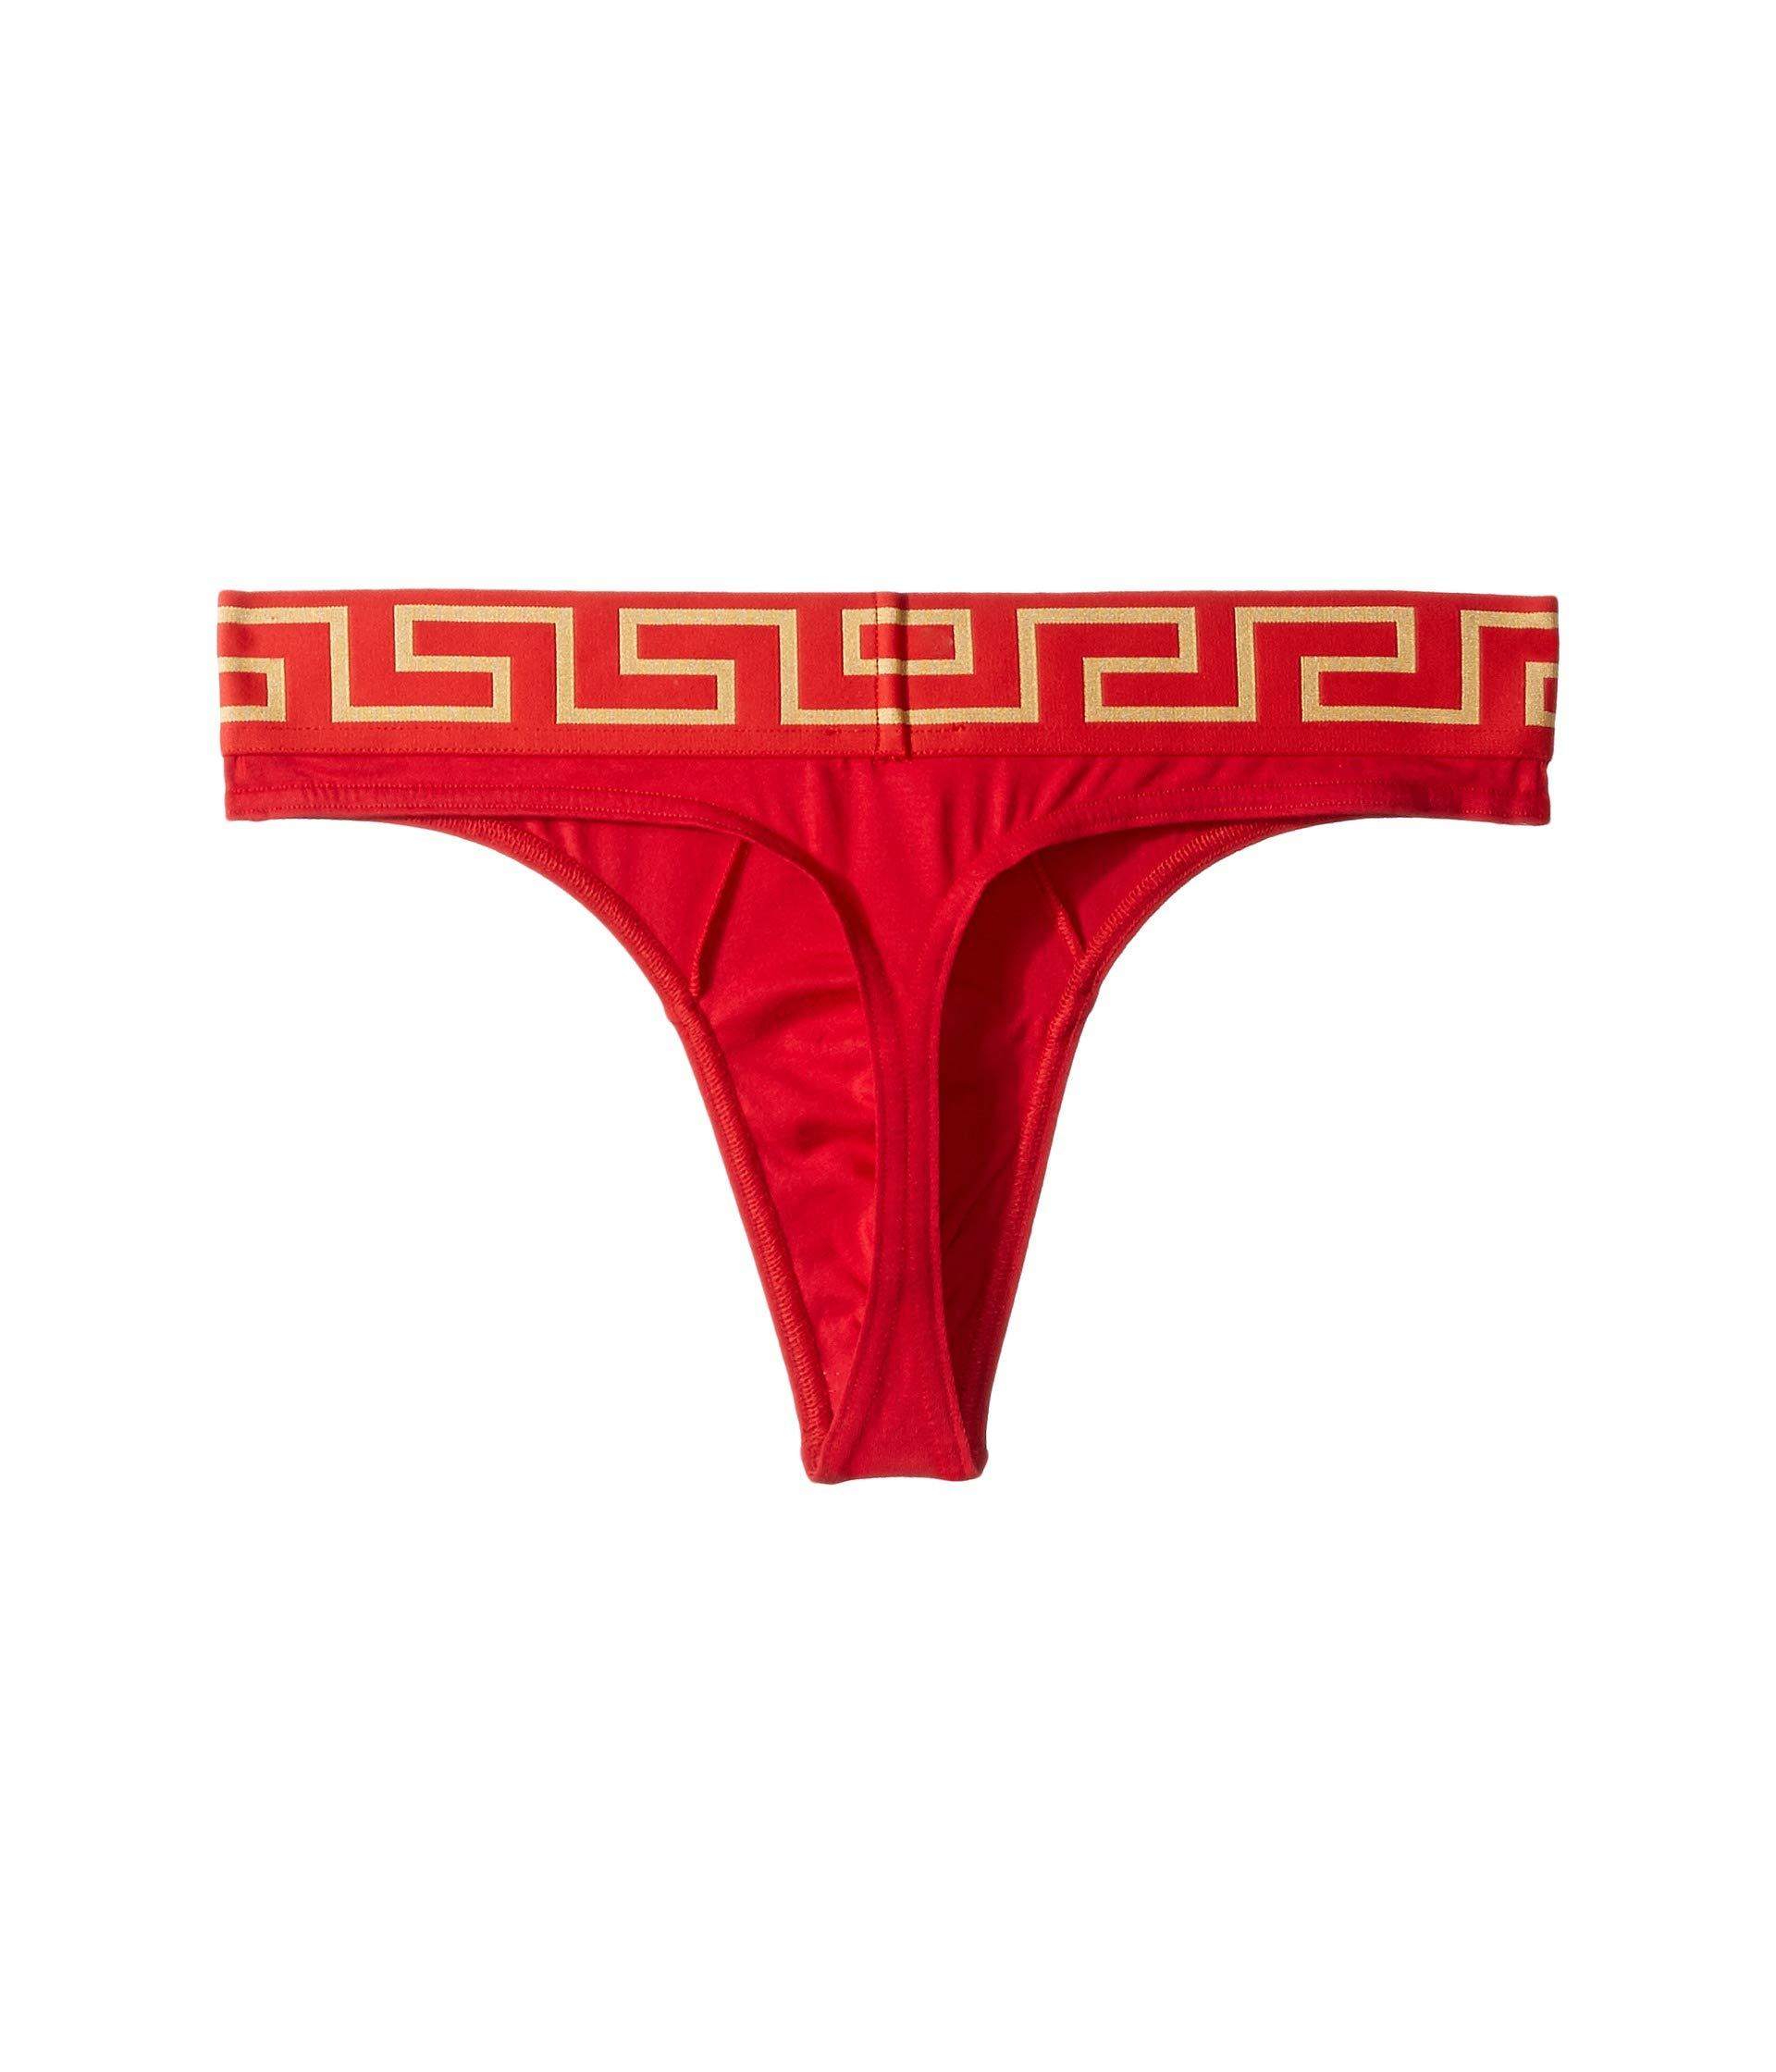 Lyst - Versace Greca Thong (red/gold) Men's Underwear in Red for Men